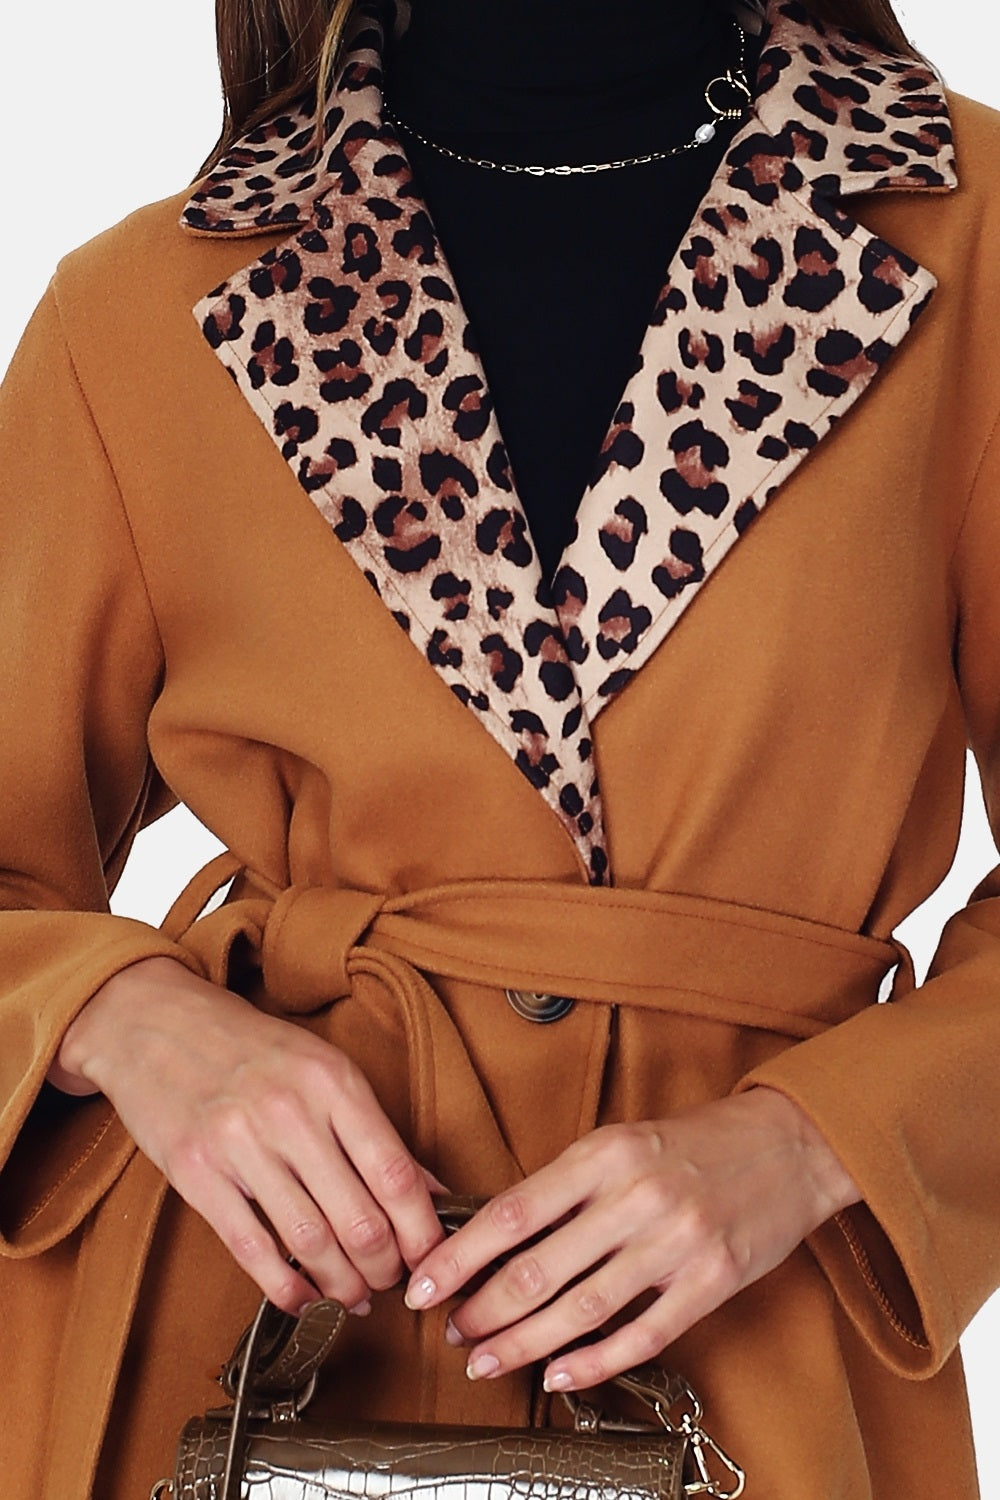 Long sleeve shawl collar coat with pockets